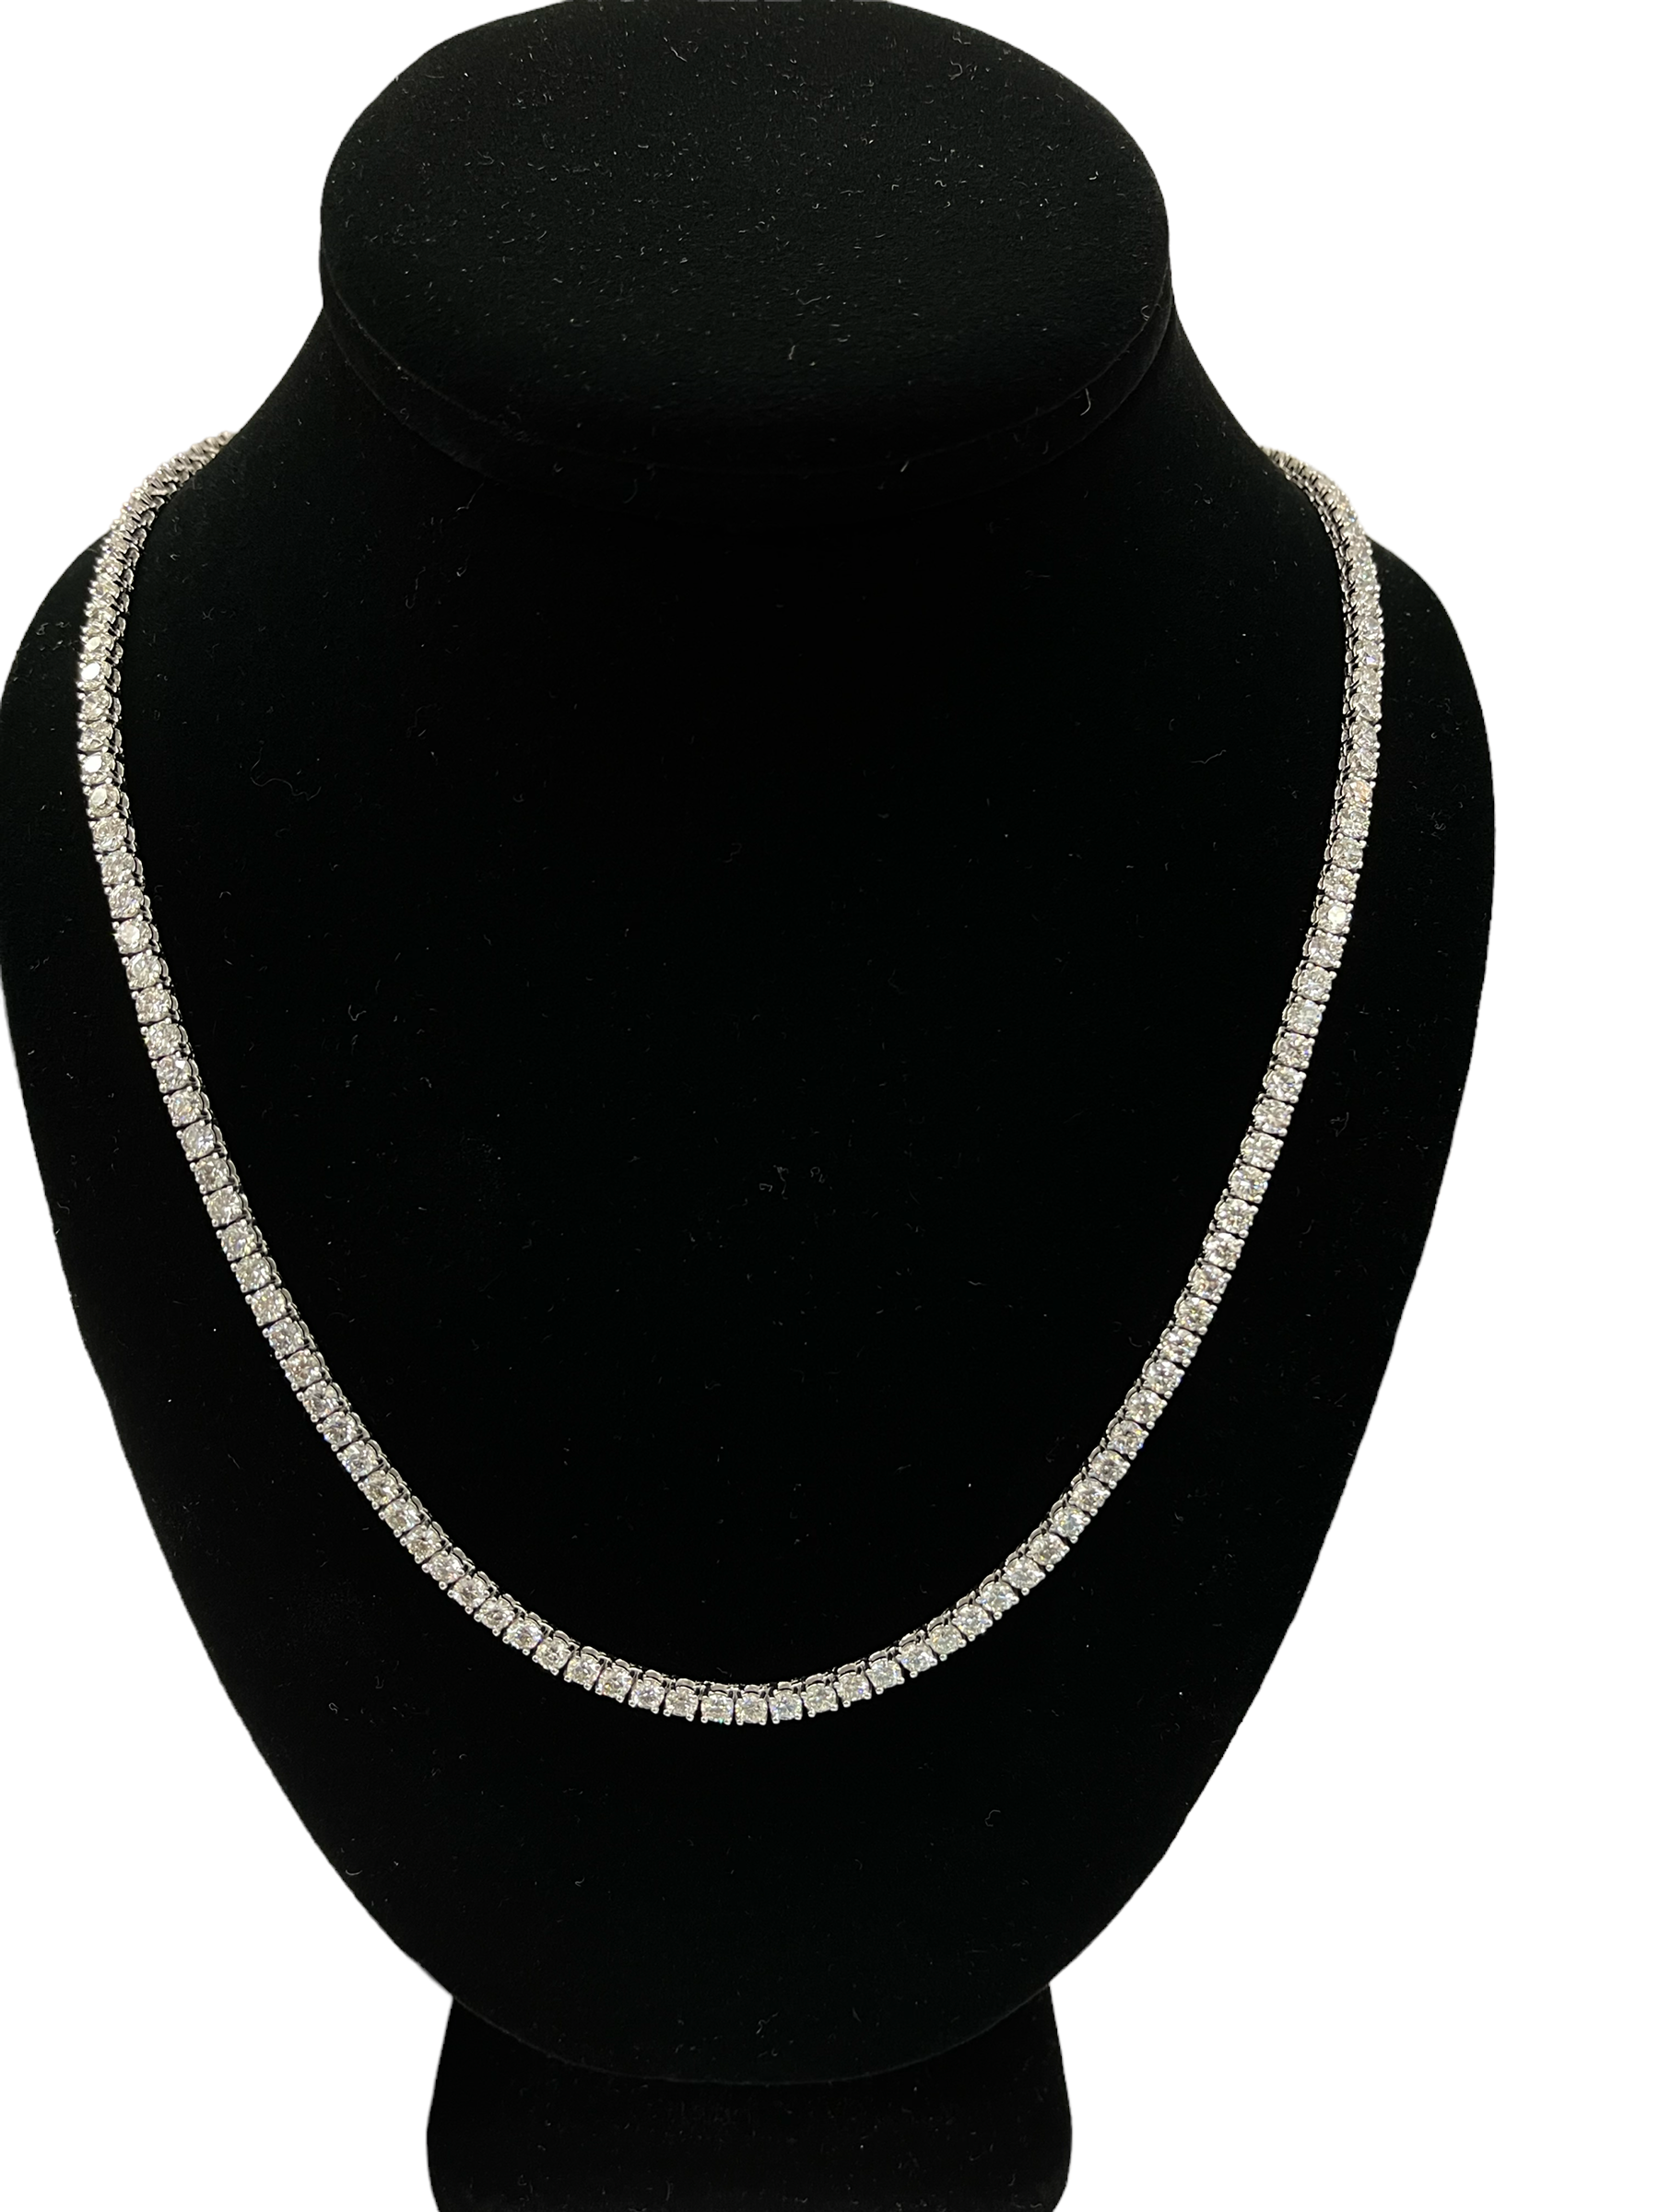 Tennis Diamond Necklace Chain Round Brilliants 21.35 Carats White Gold